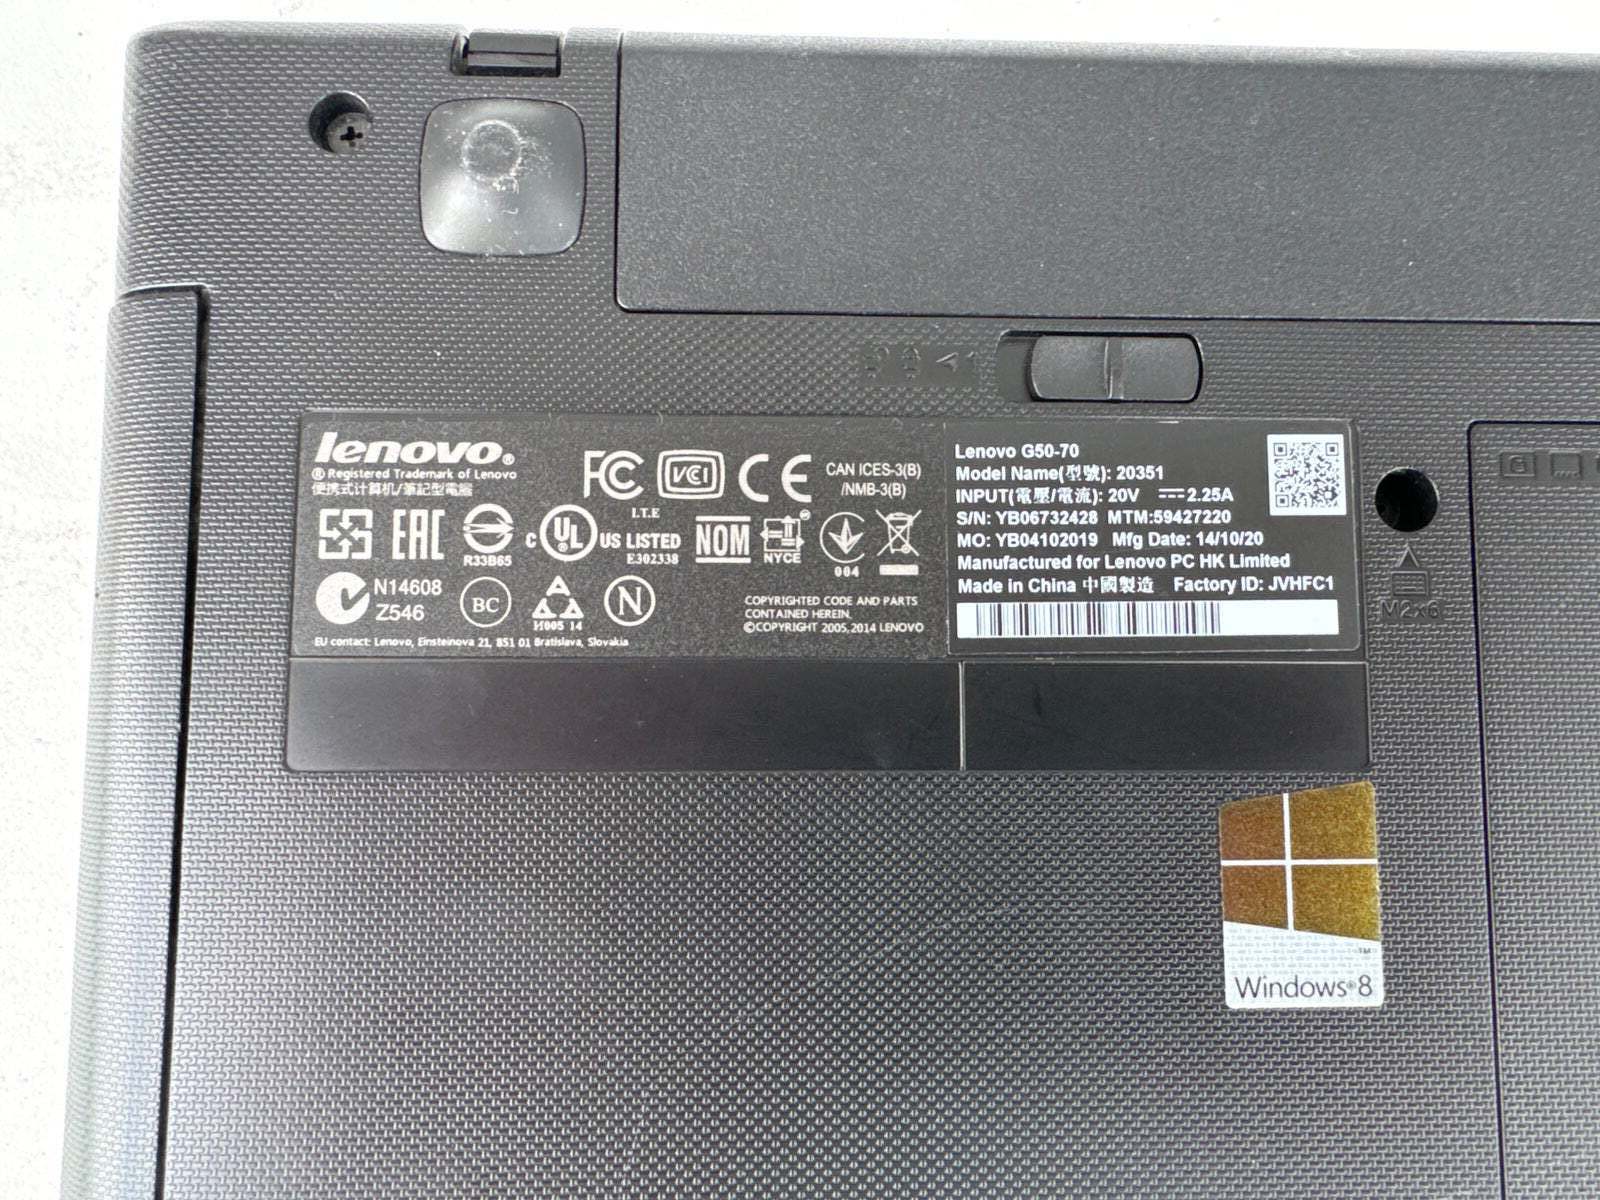 Lenovo g50-70 - 20351, 2.40 GHz, 8 GB ram